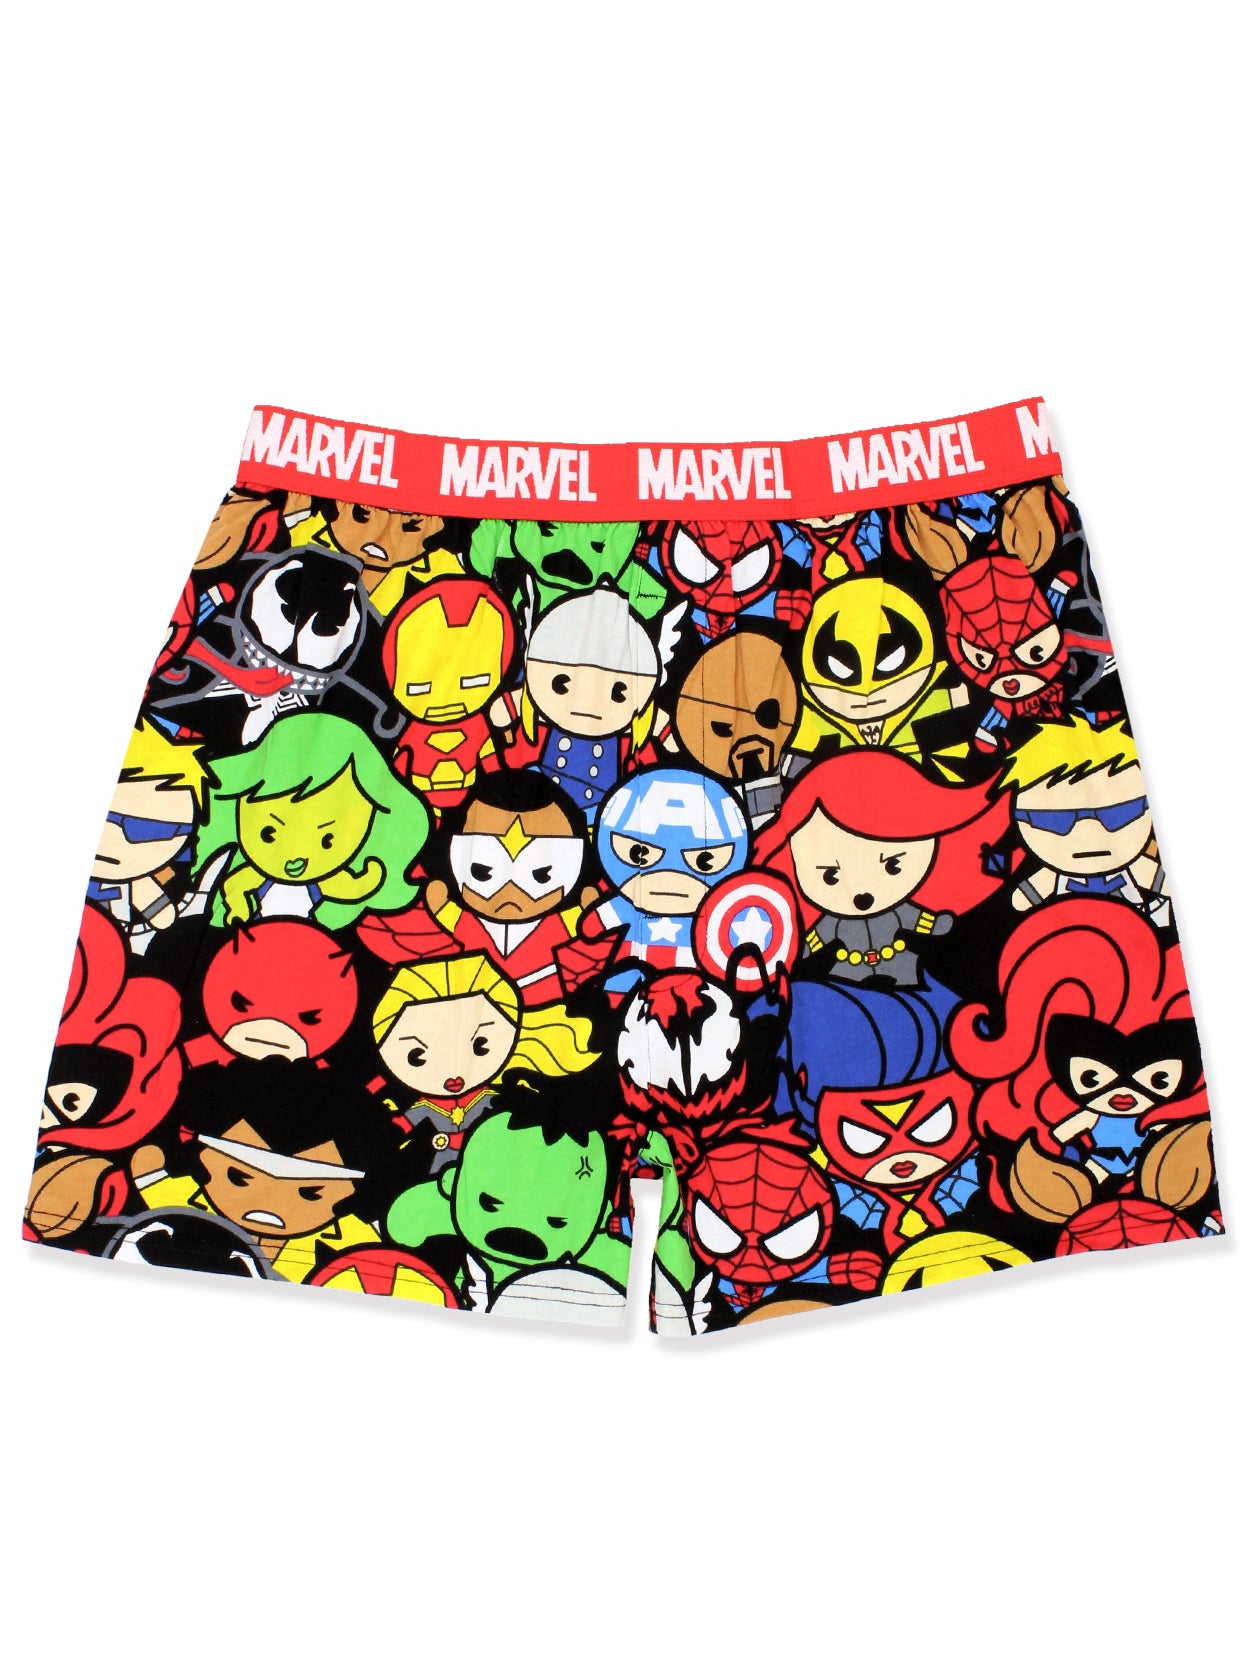 Spider-Man Web Comic Style Men's Male Boxer Lounge Shorts 17SM014MBXYT 